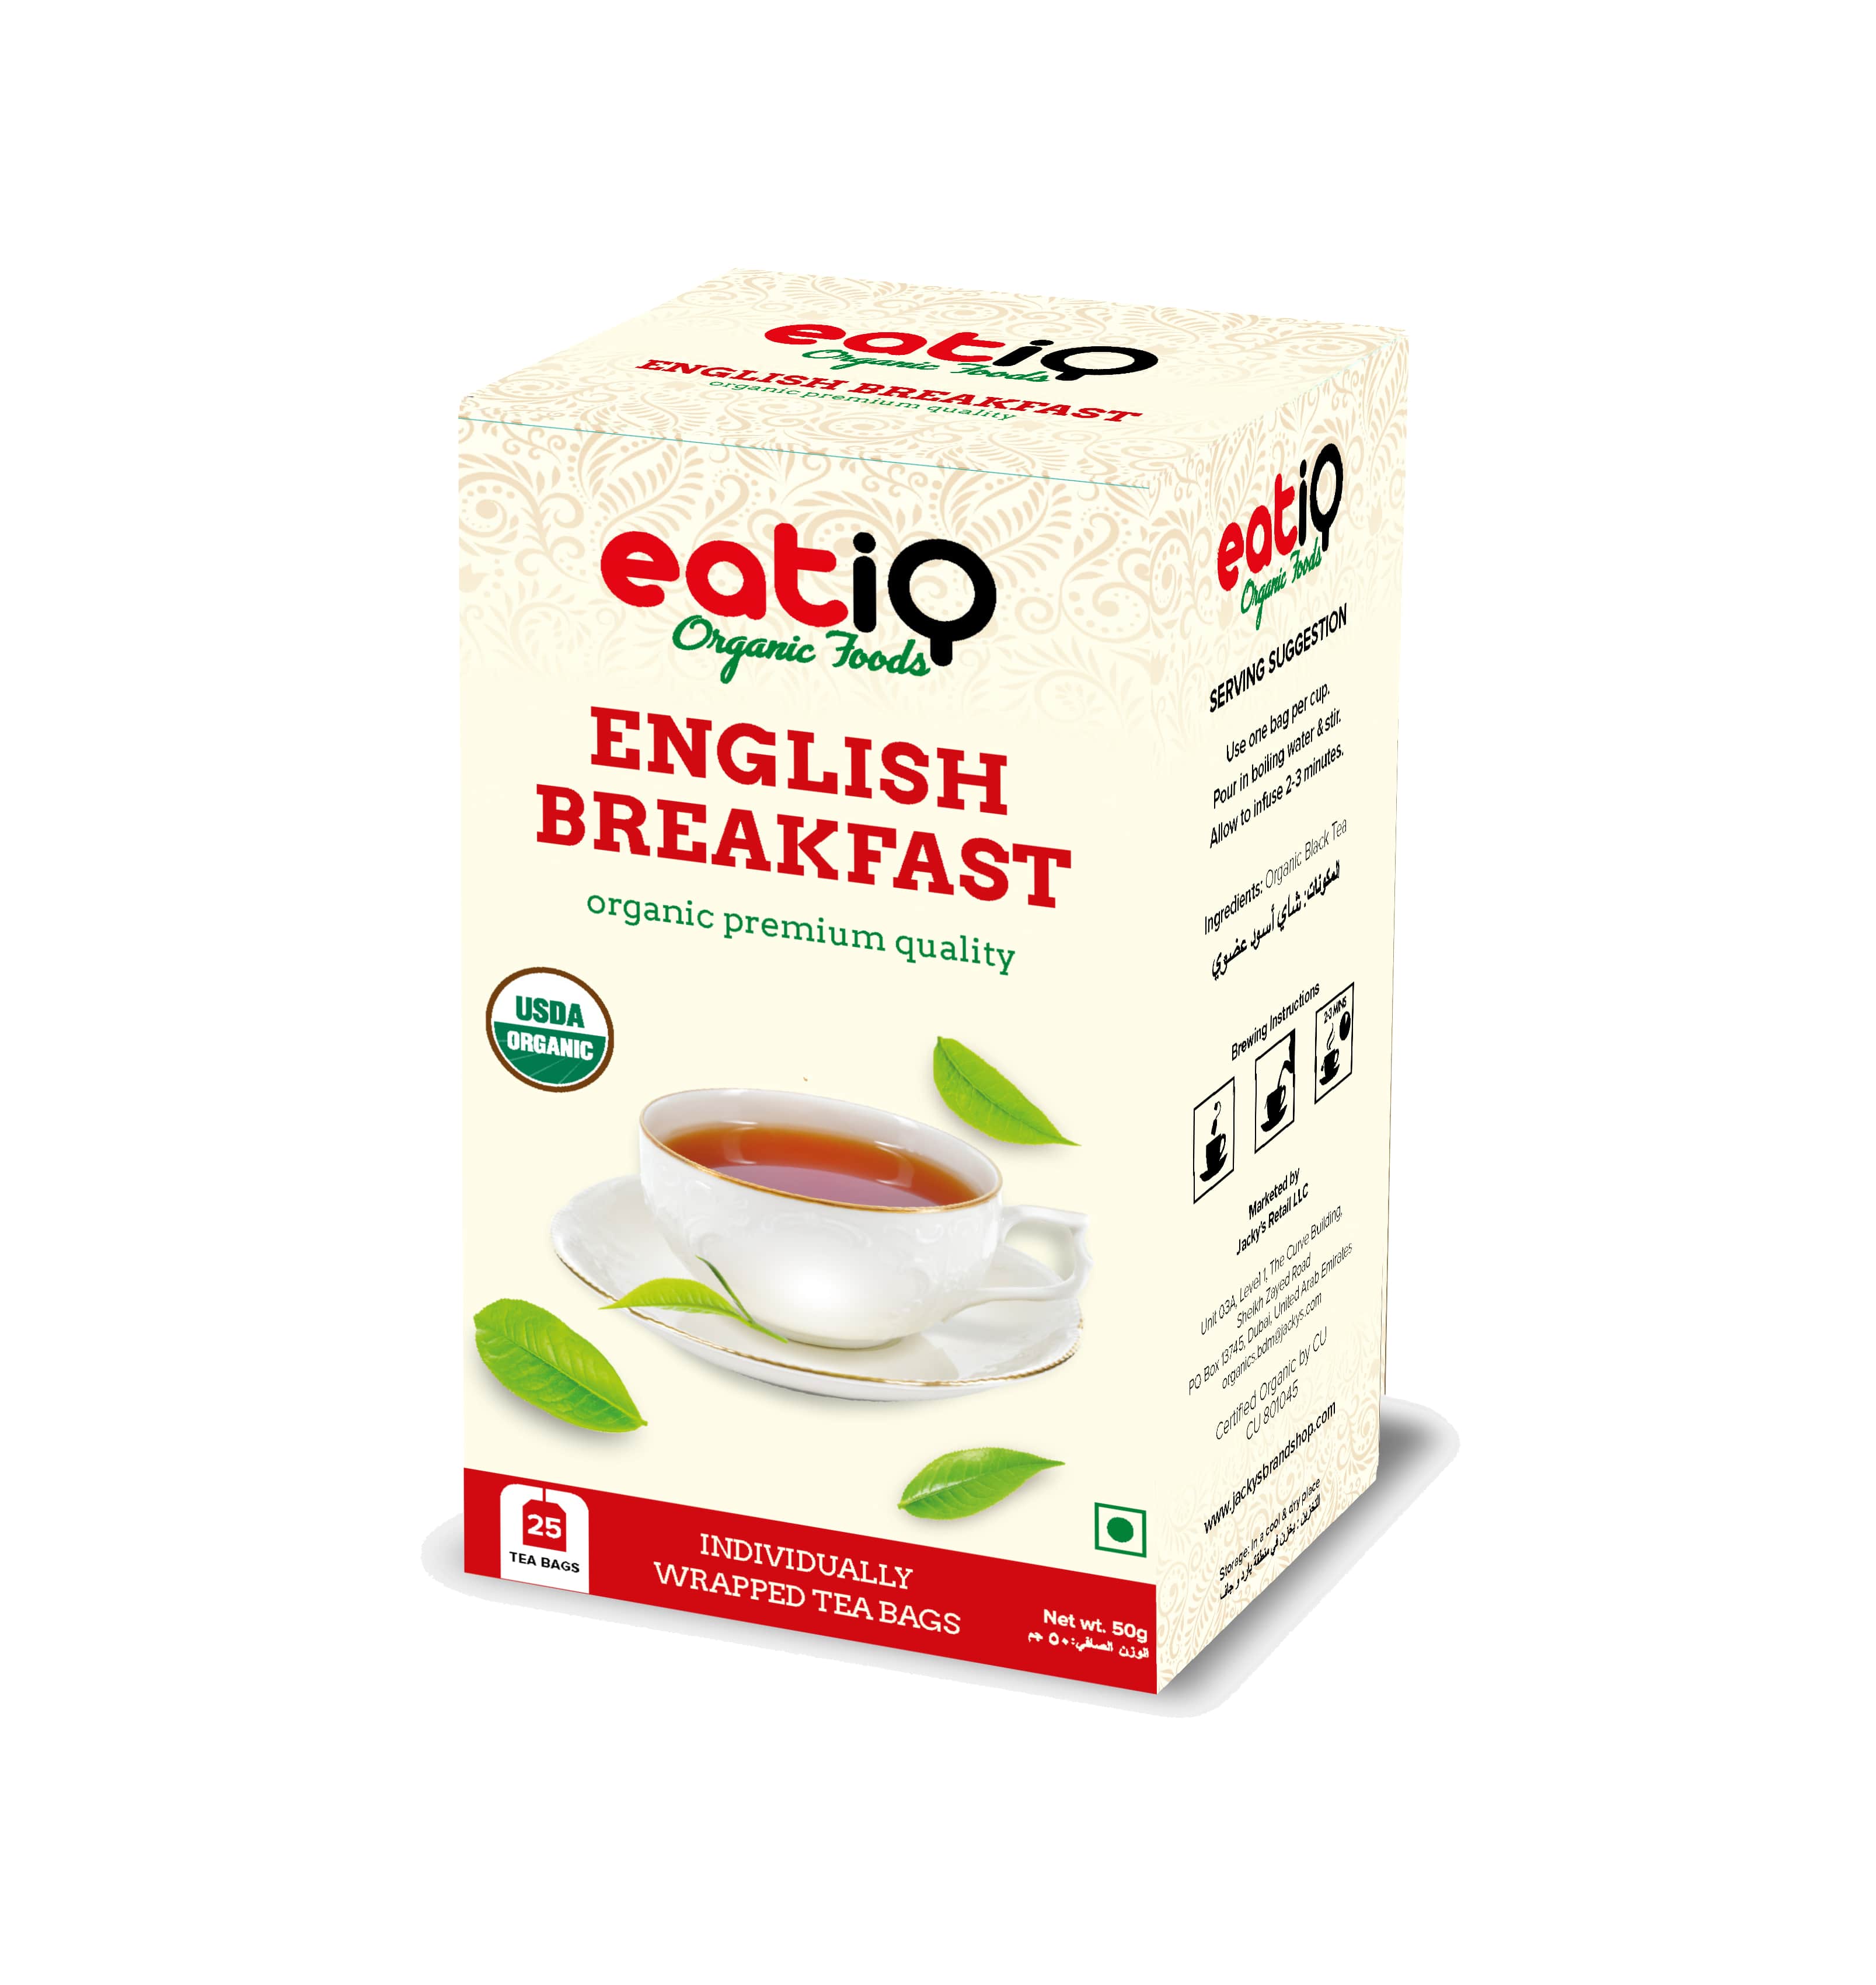 EATIQ ORGANIC FOODS English Breakfast, 50g